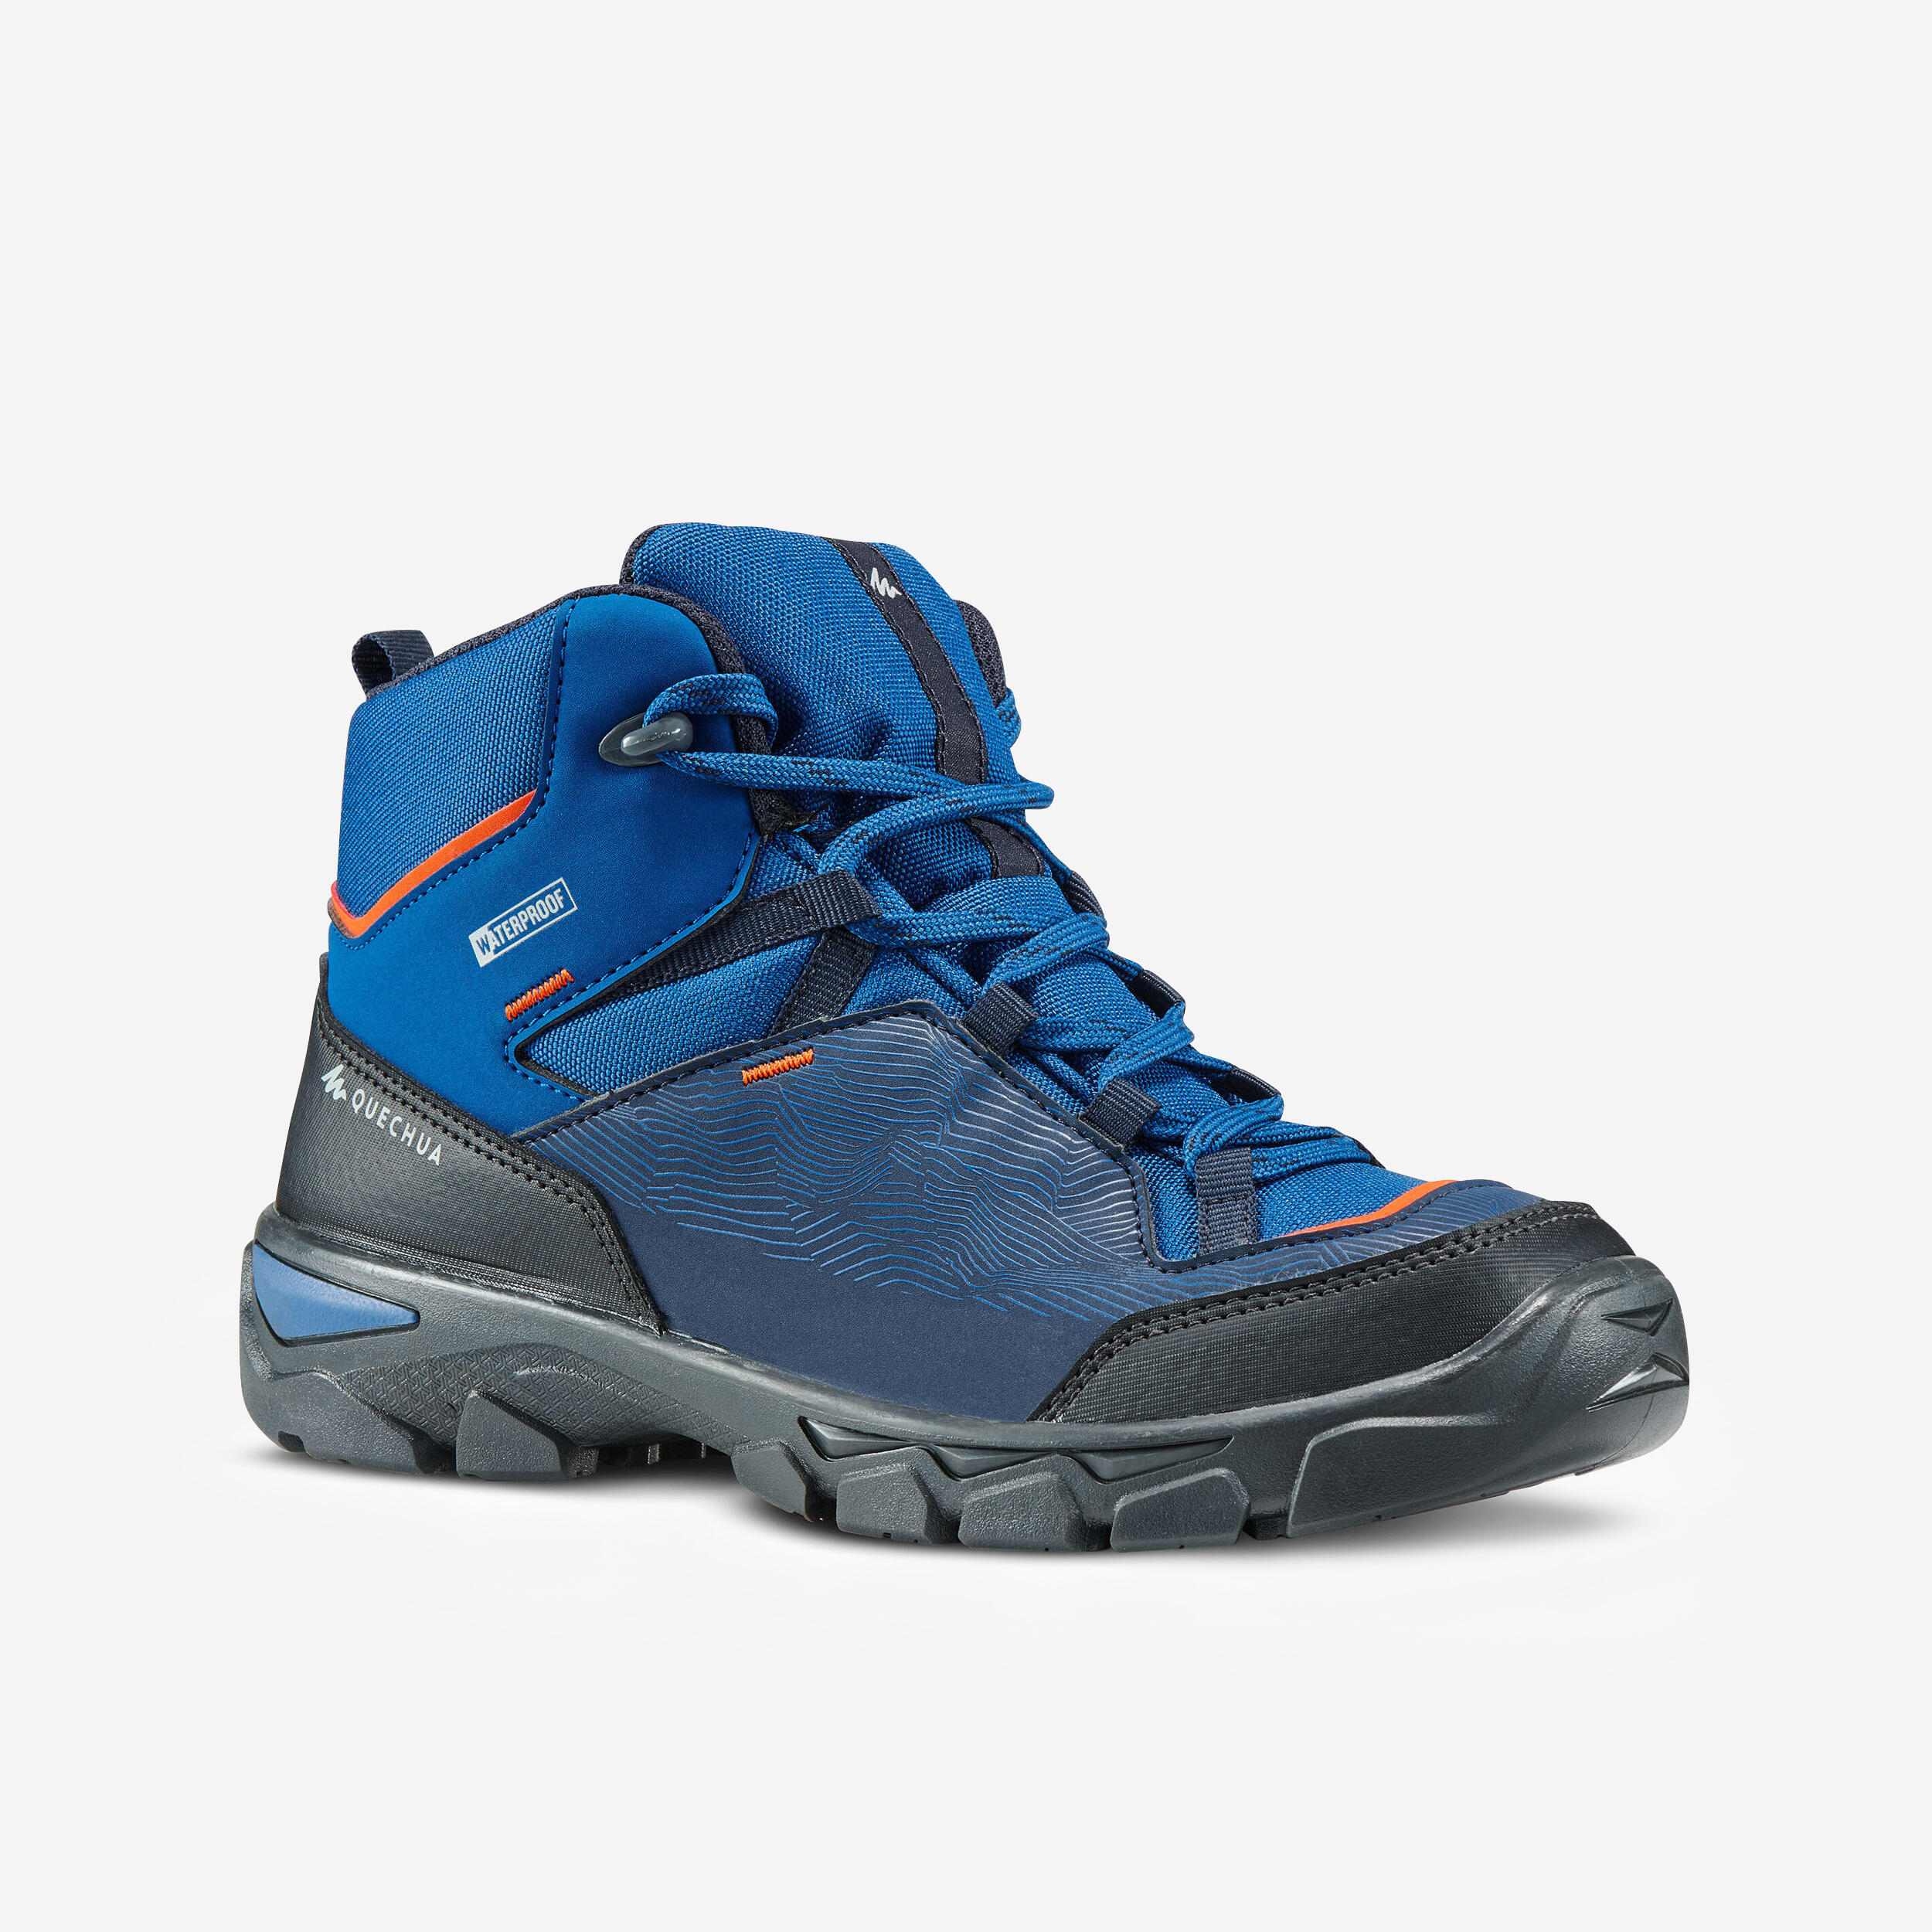 Quechua Chidren's Waterproof Walking Shoes - MH120 Mid Blue Size 3-5